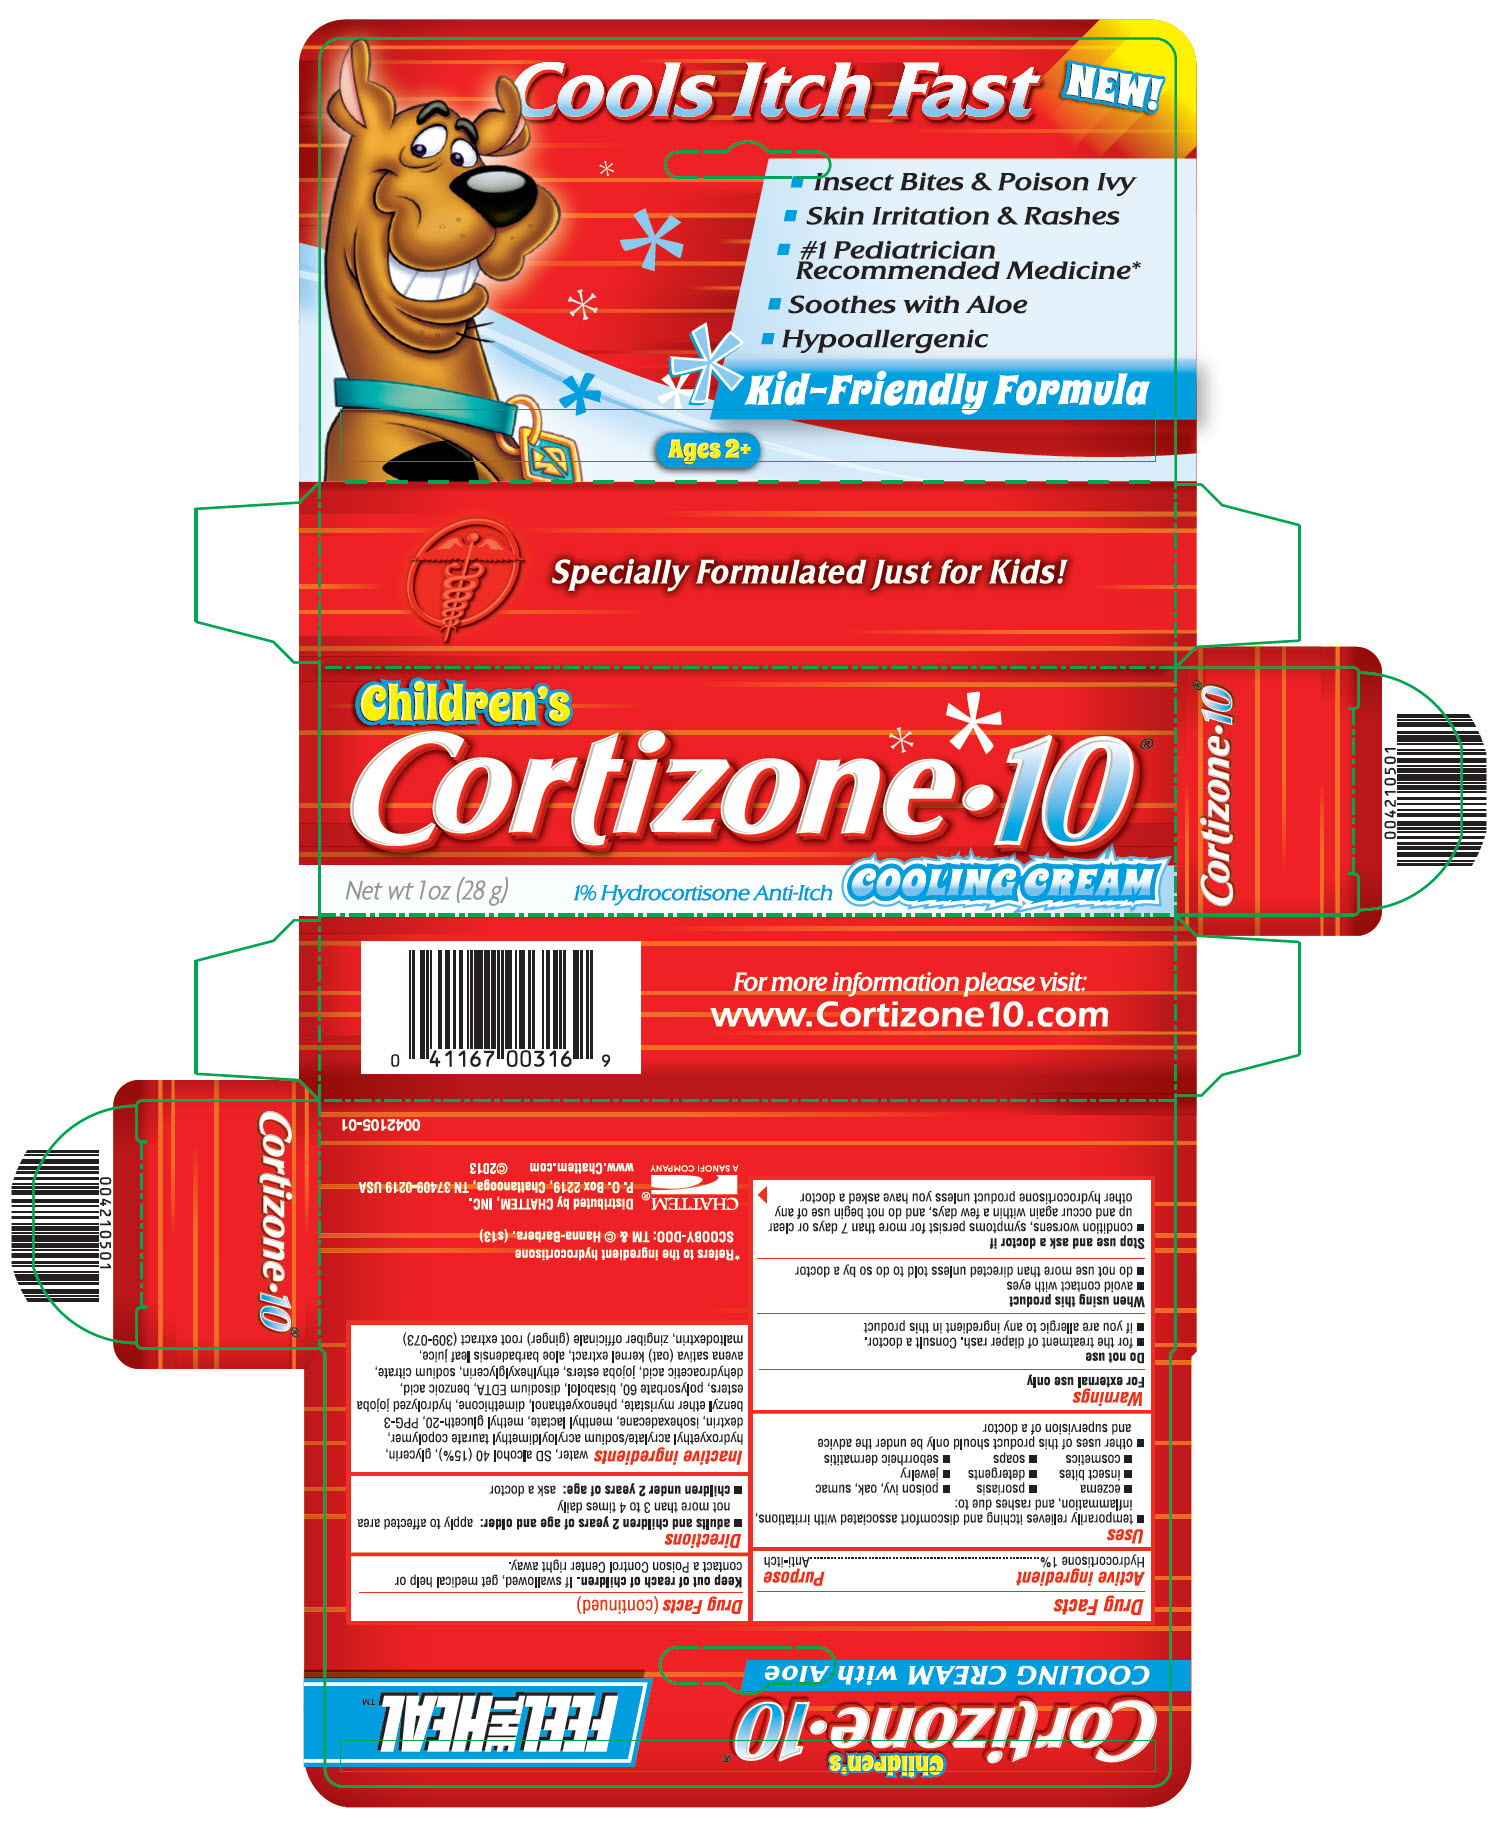 Children's Cortizone-10 Cooling Cream Net wt 1 OZ (28 g) 1% Hydrocortisone Anti-Itch Cooling Cream